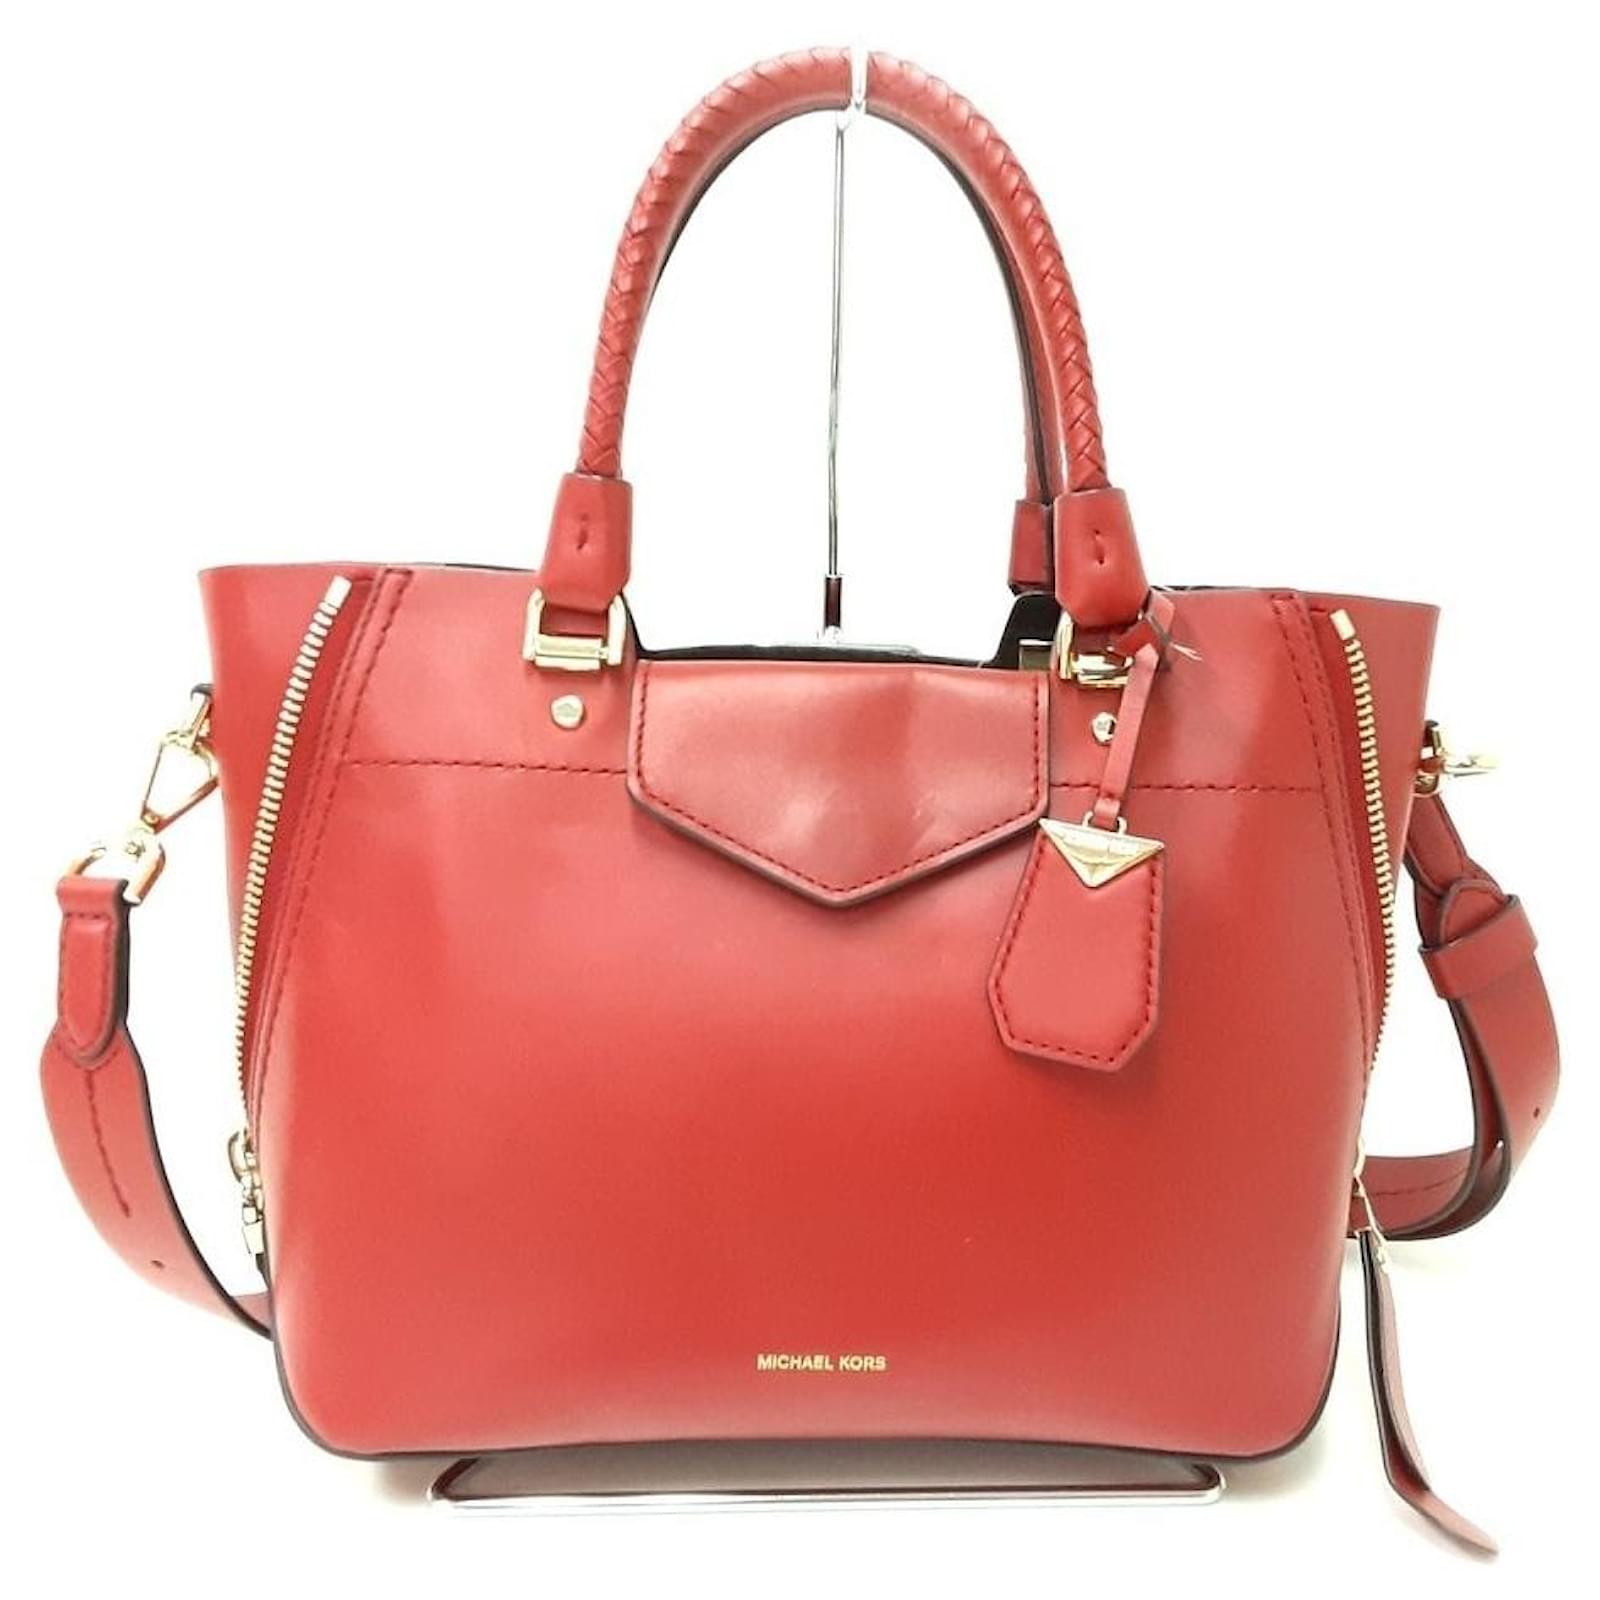 Manhattan leather handbag Michael Kors Black in Leather  32478671